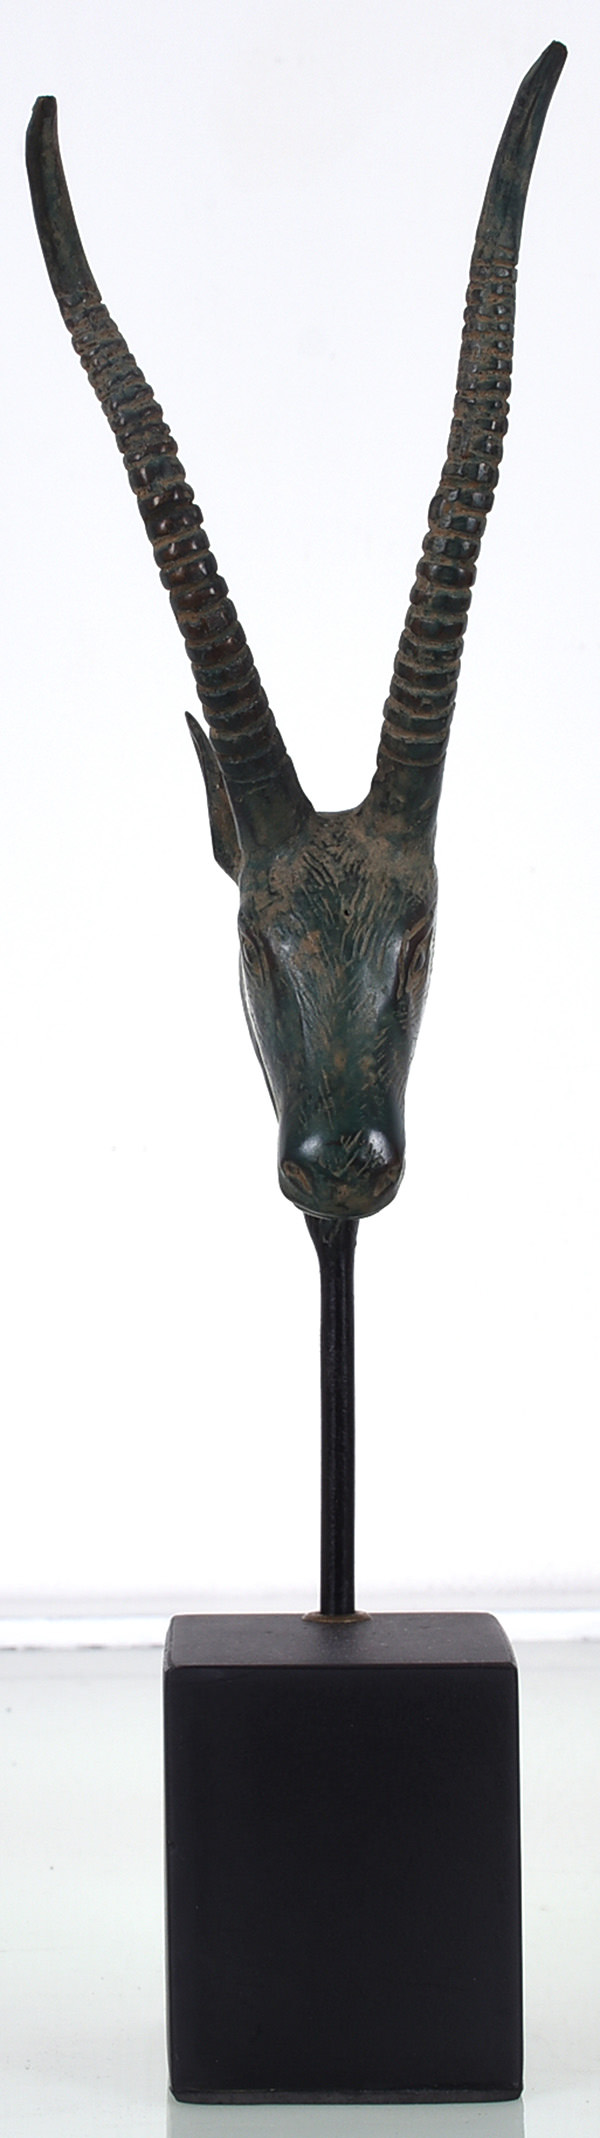 impala head sculpture